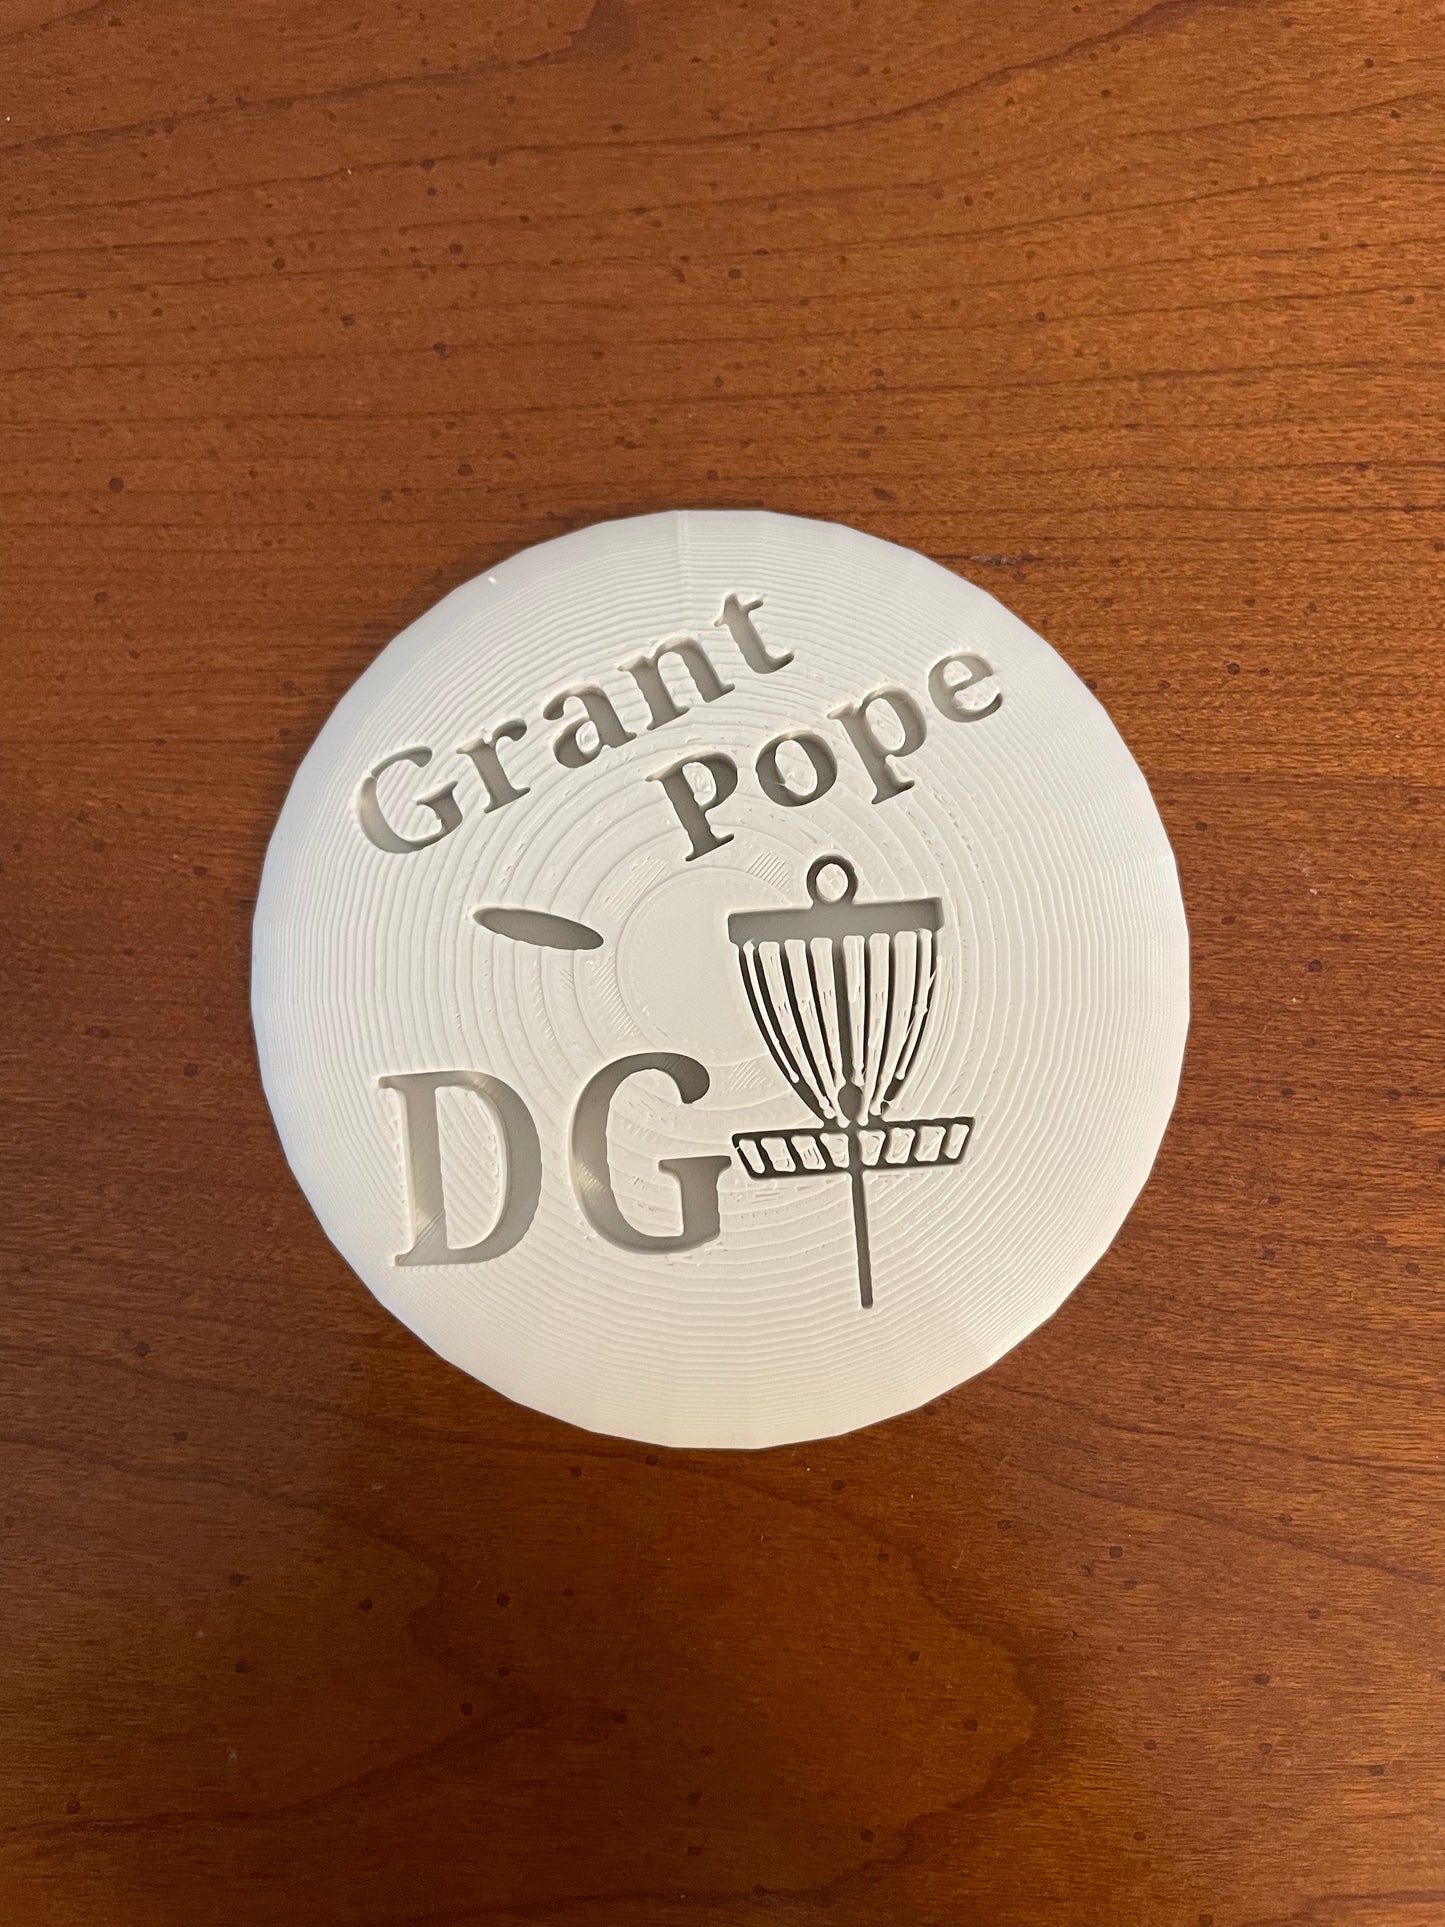 Grant Pope DG Disc Golf Mini